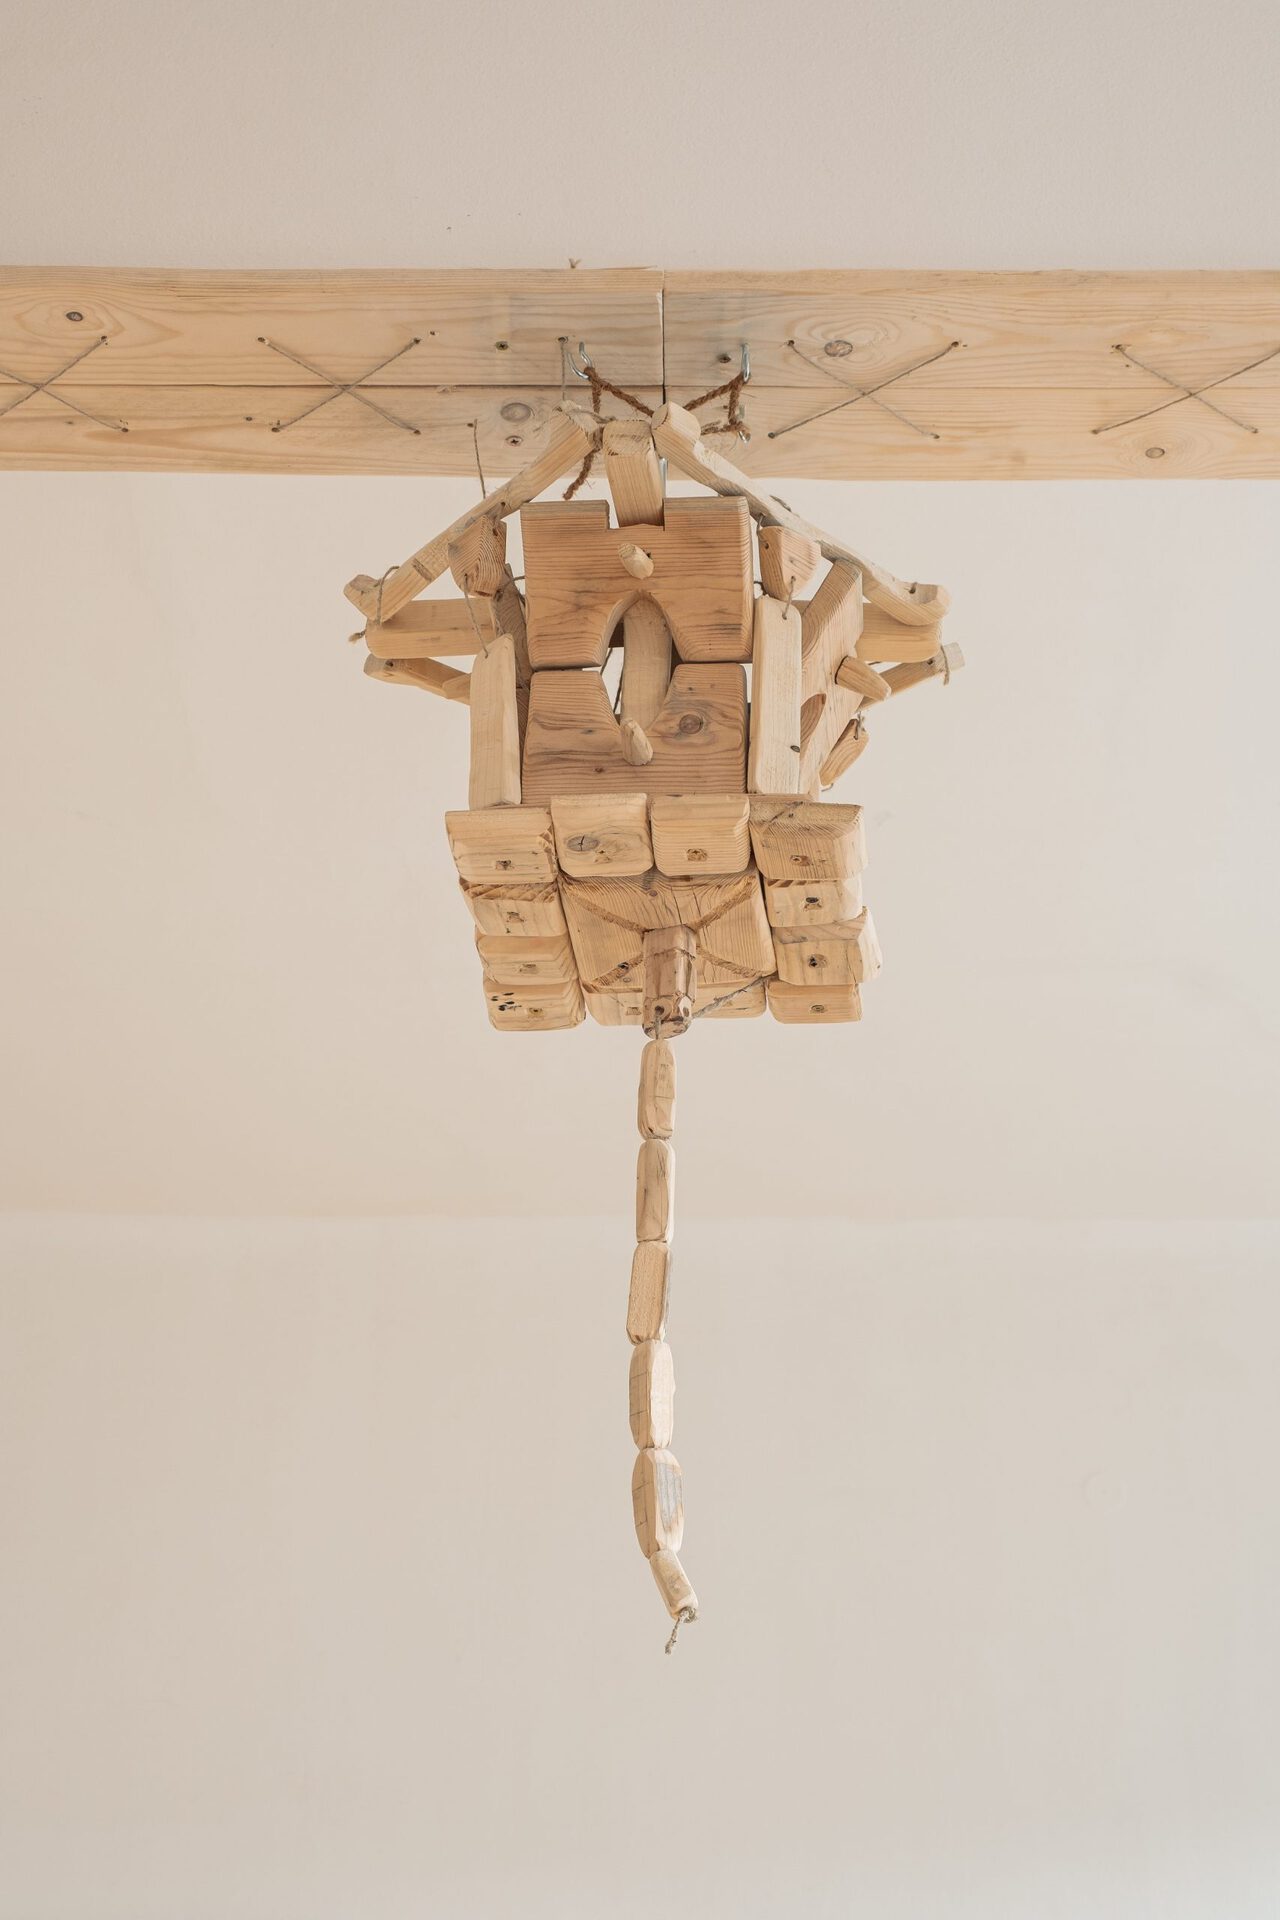 KANREC SAKUL, SUNSHINE,wood object 2020,